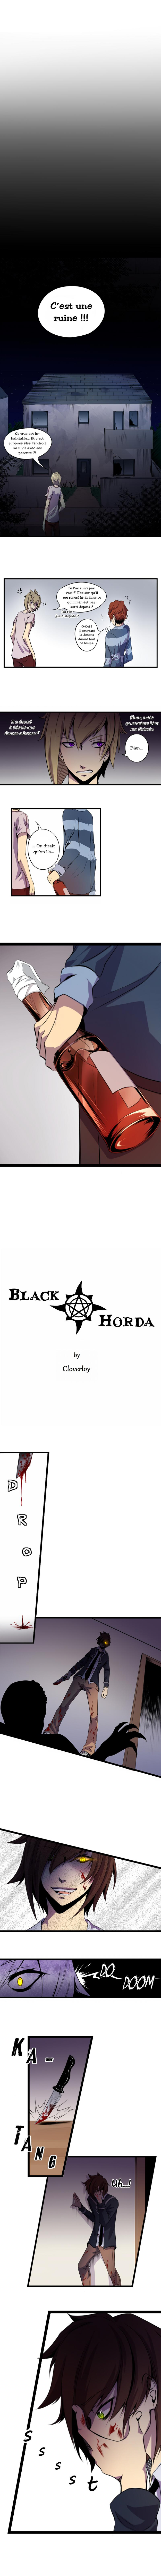 Black Horda: Chapter 14 - Page 1